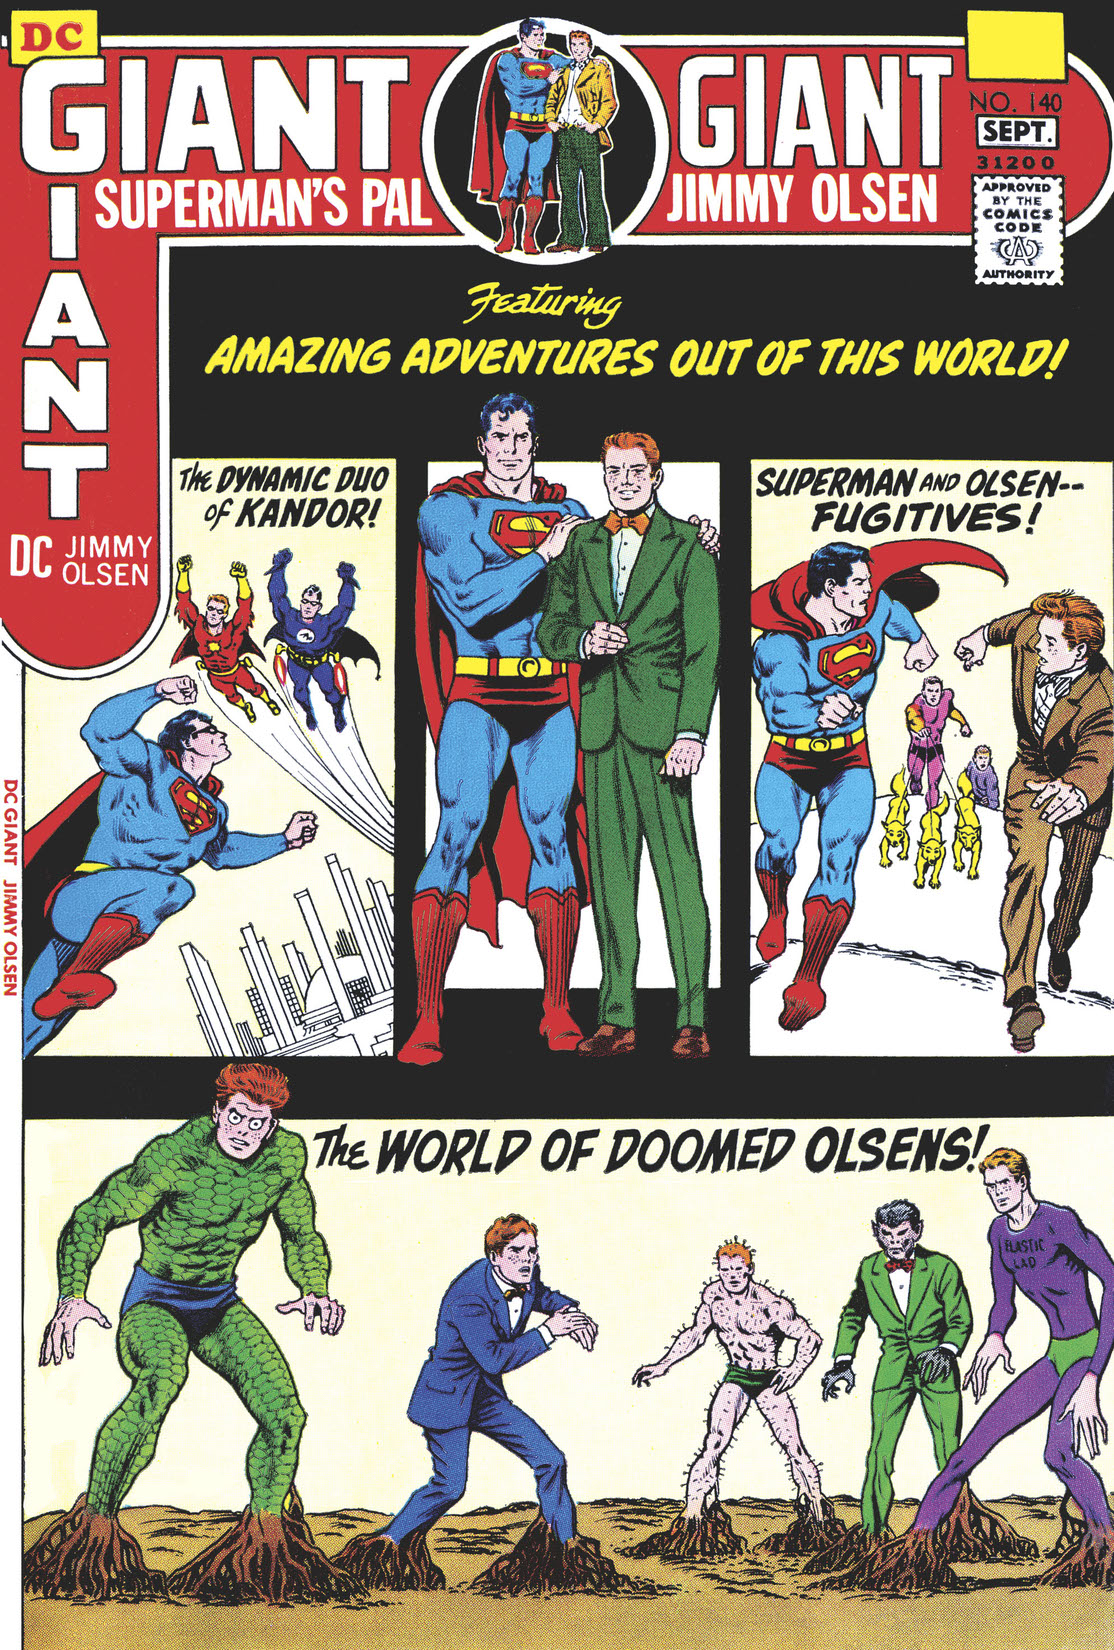 Superman's Pal, Jimmy Olsen #140 preview images